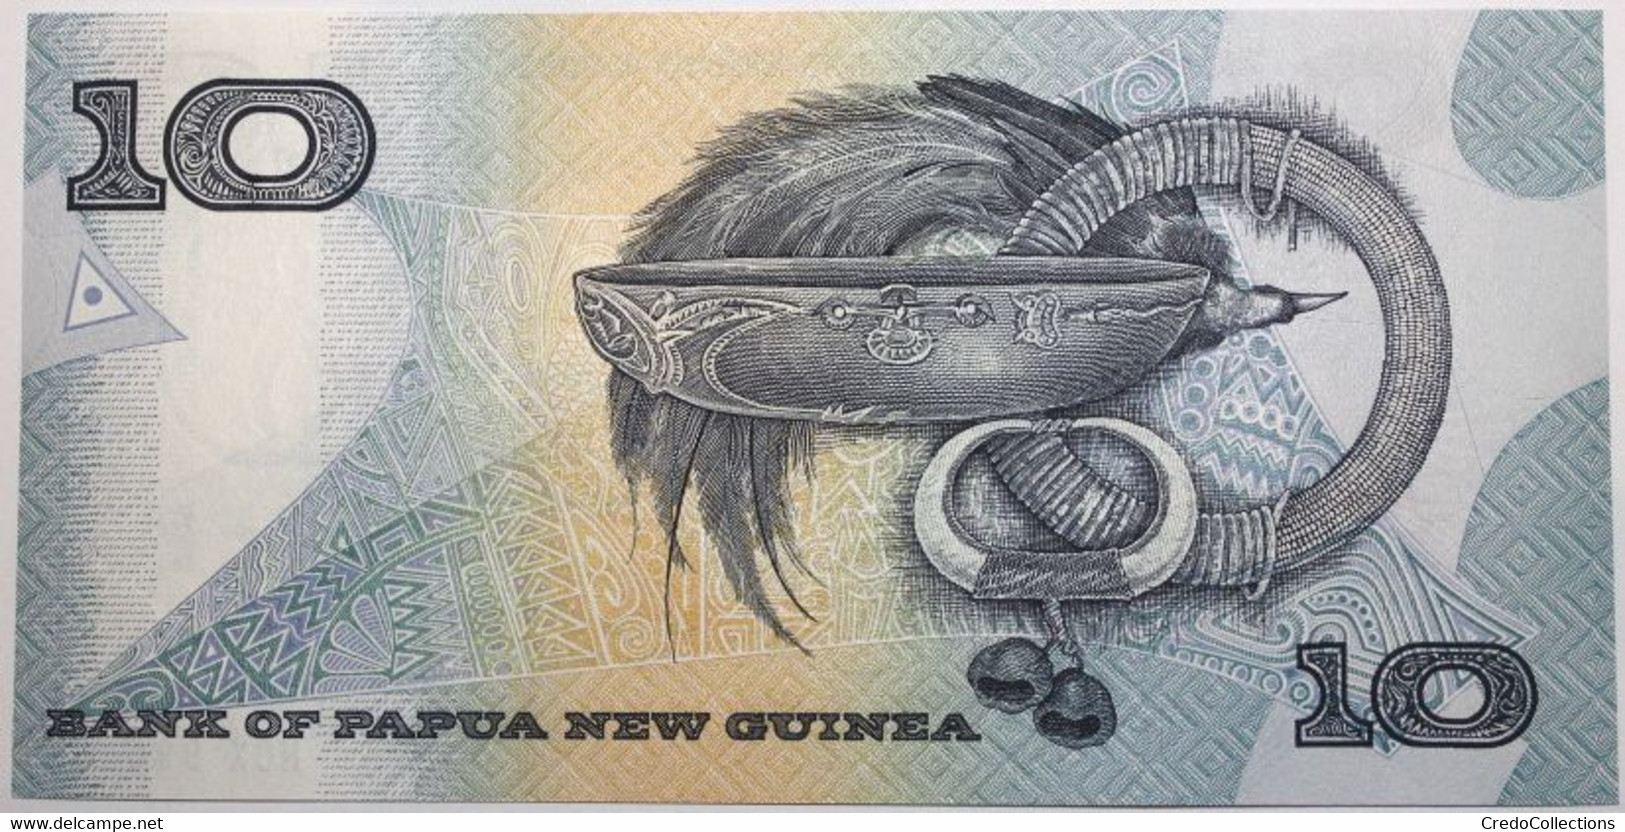 Papouasie-Nouvelle Guinée - 10 Kina - 1995 - PICK 9c - NEUF - Papouasie-Nouvelle-Guinée